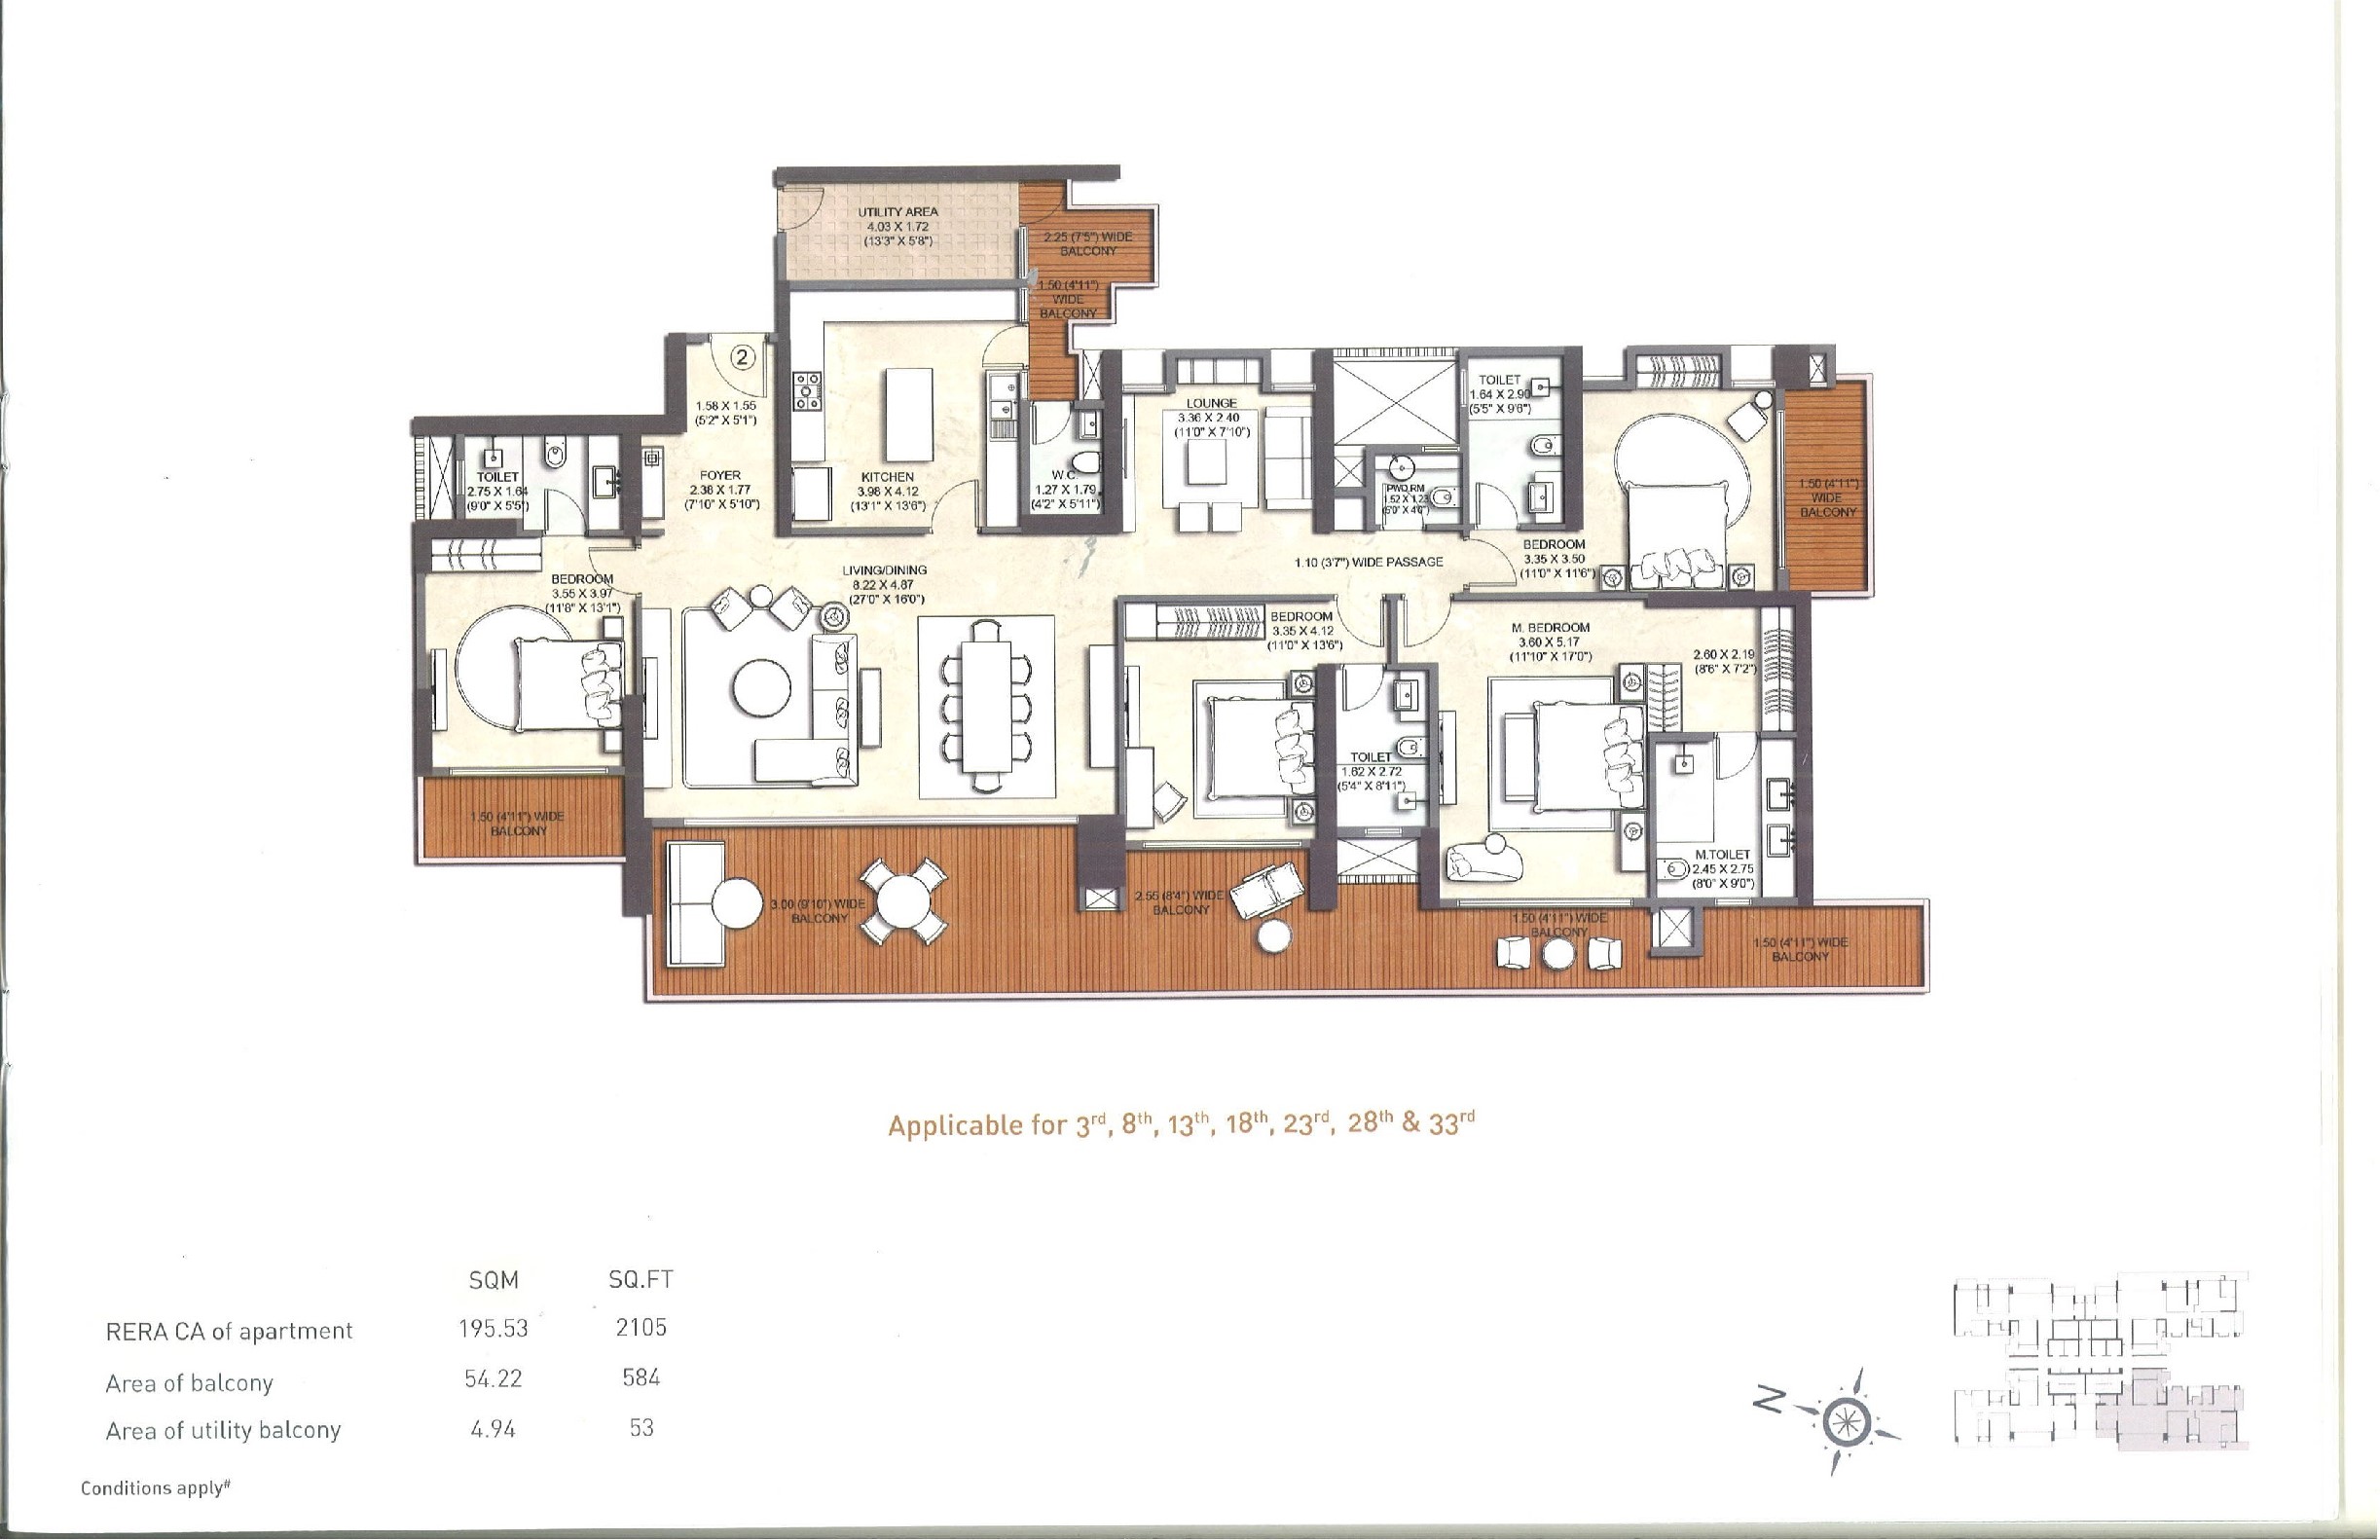 Kalpataru Vista 2105 Sq. Ft. floor plan